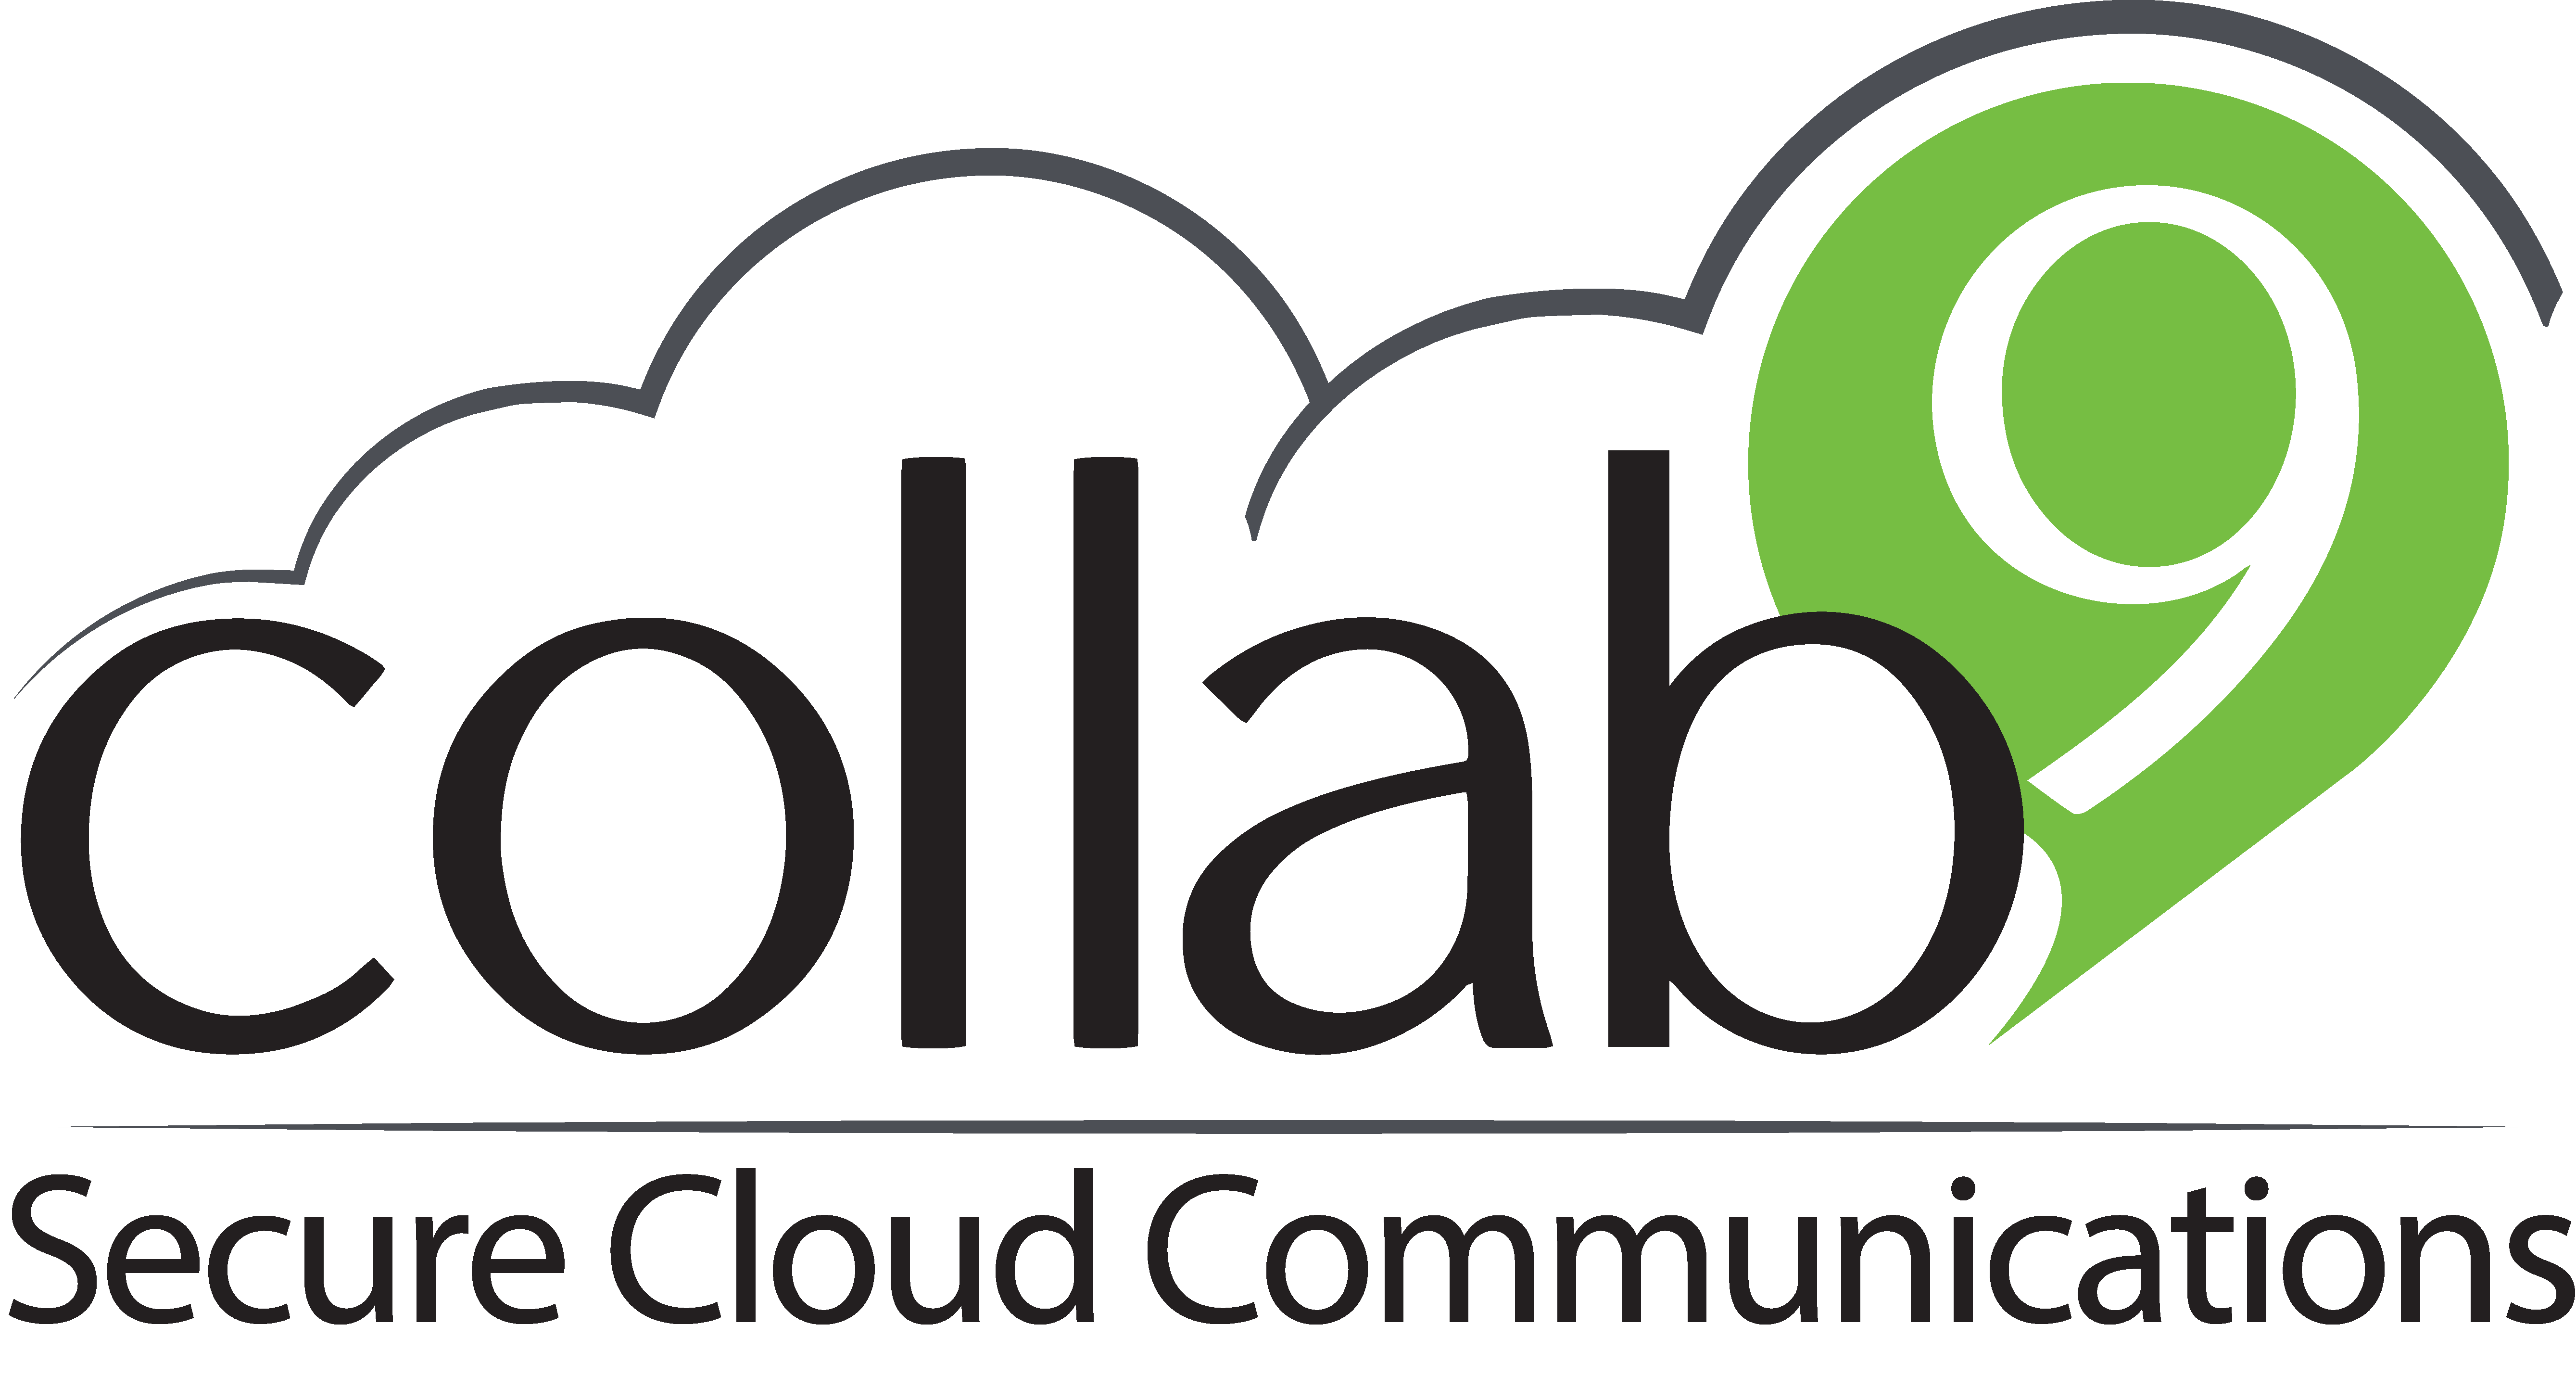 Collab9-Logo--Secure-Cloud-Communications[1].png